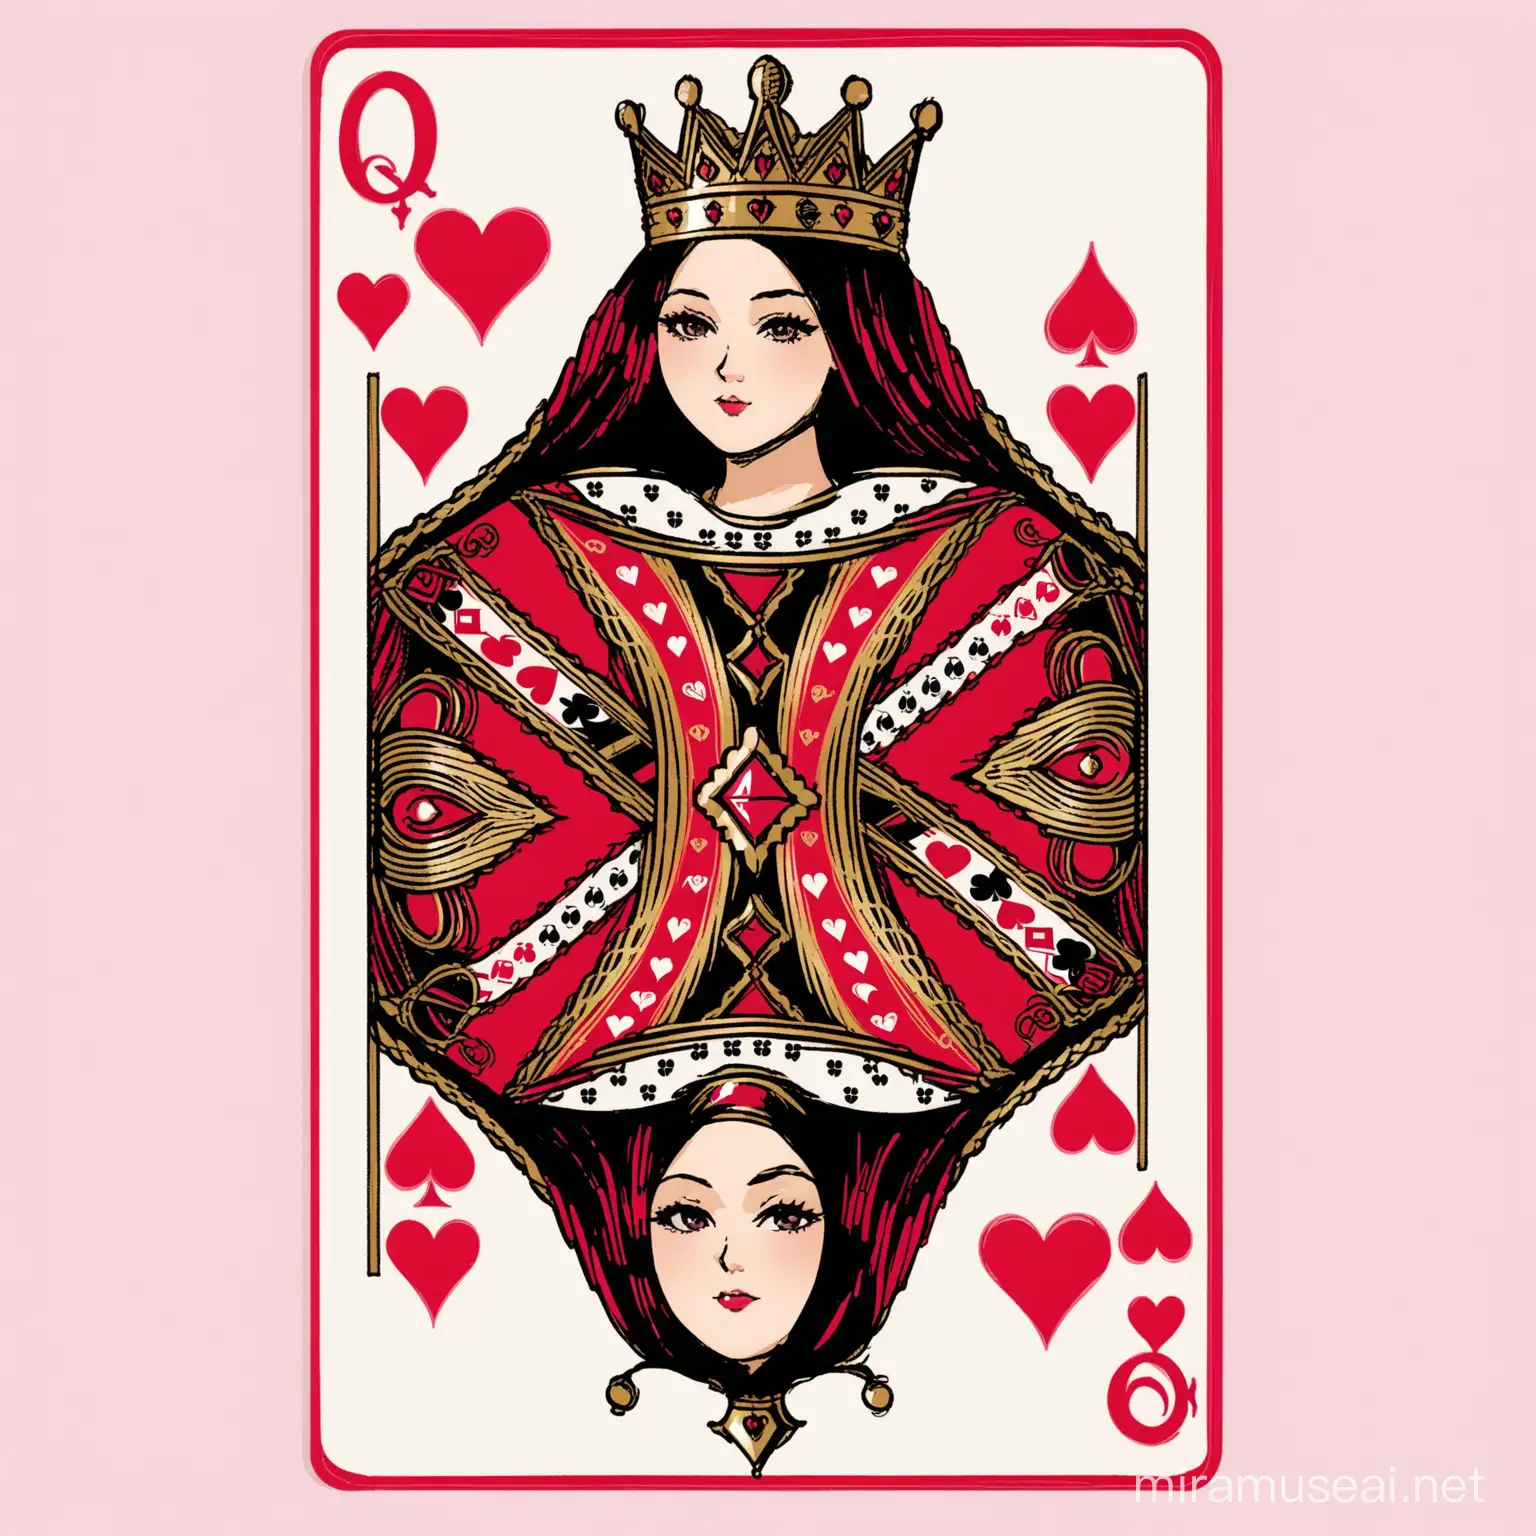 Regal Queen of Hearts Card Illustration